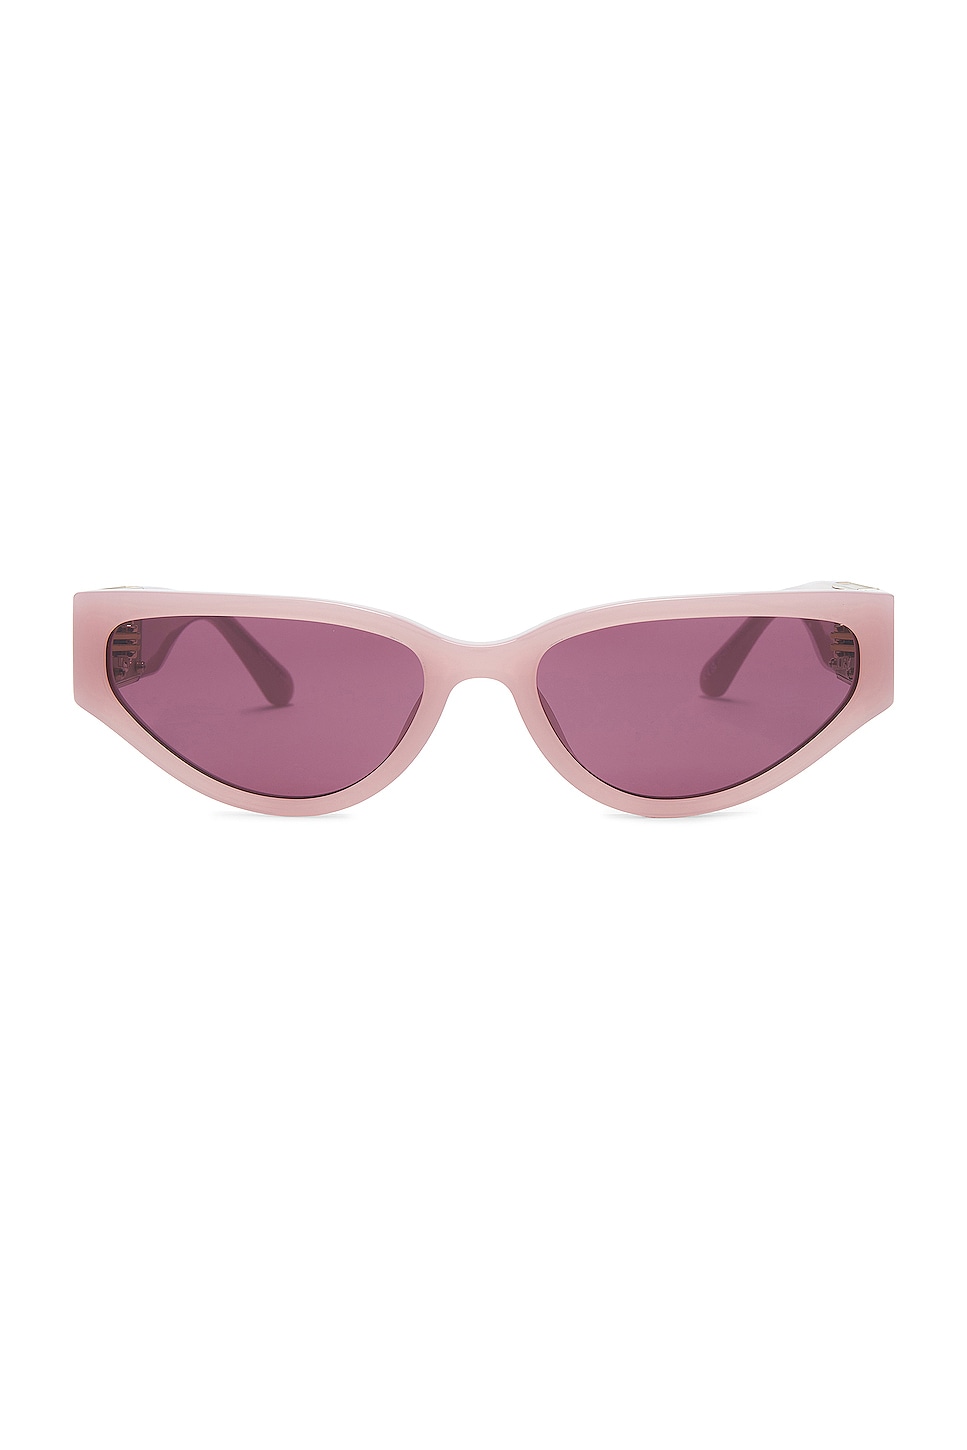 Tomie Sunglasses in Rose